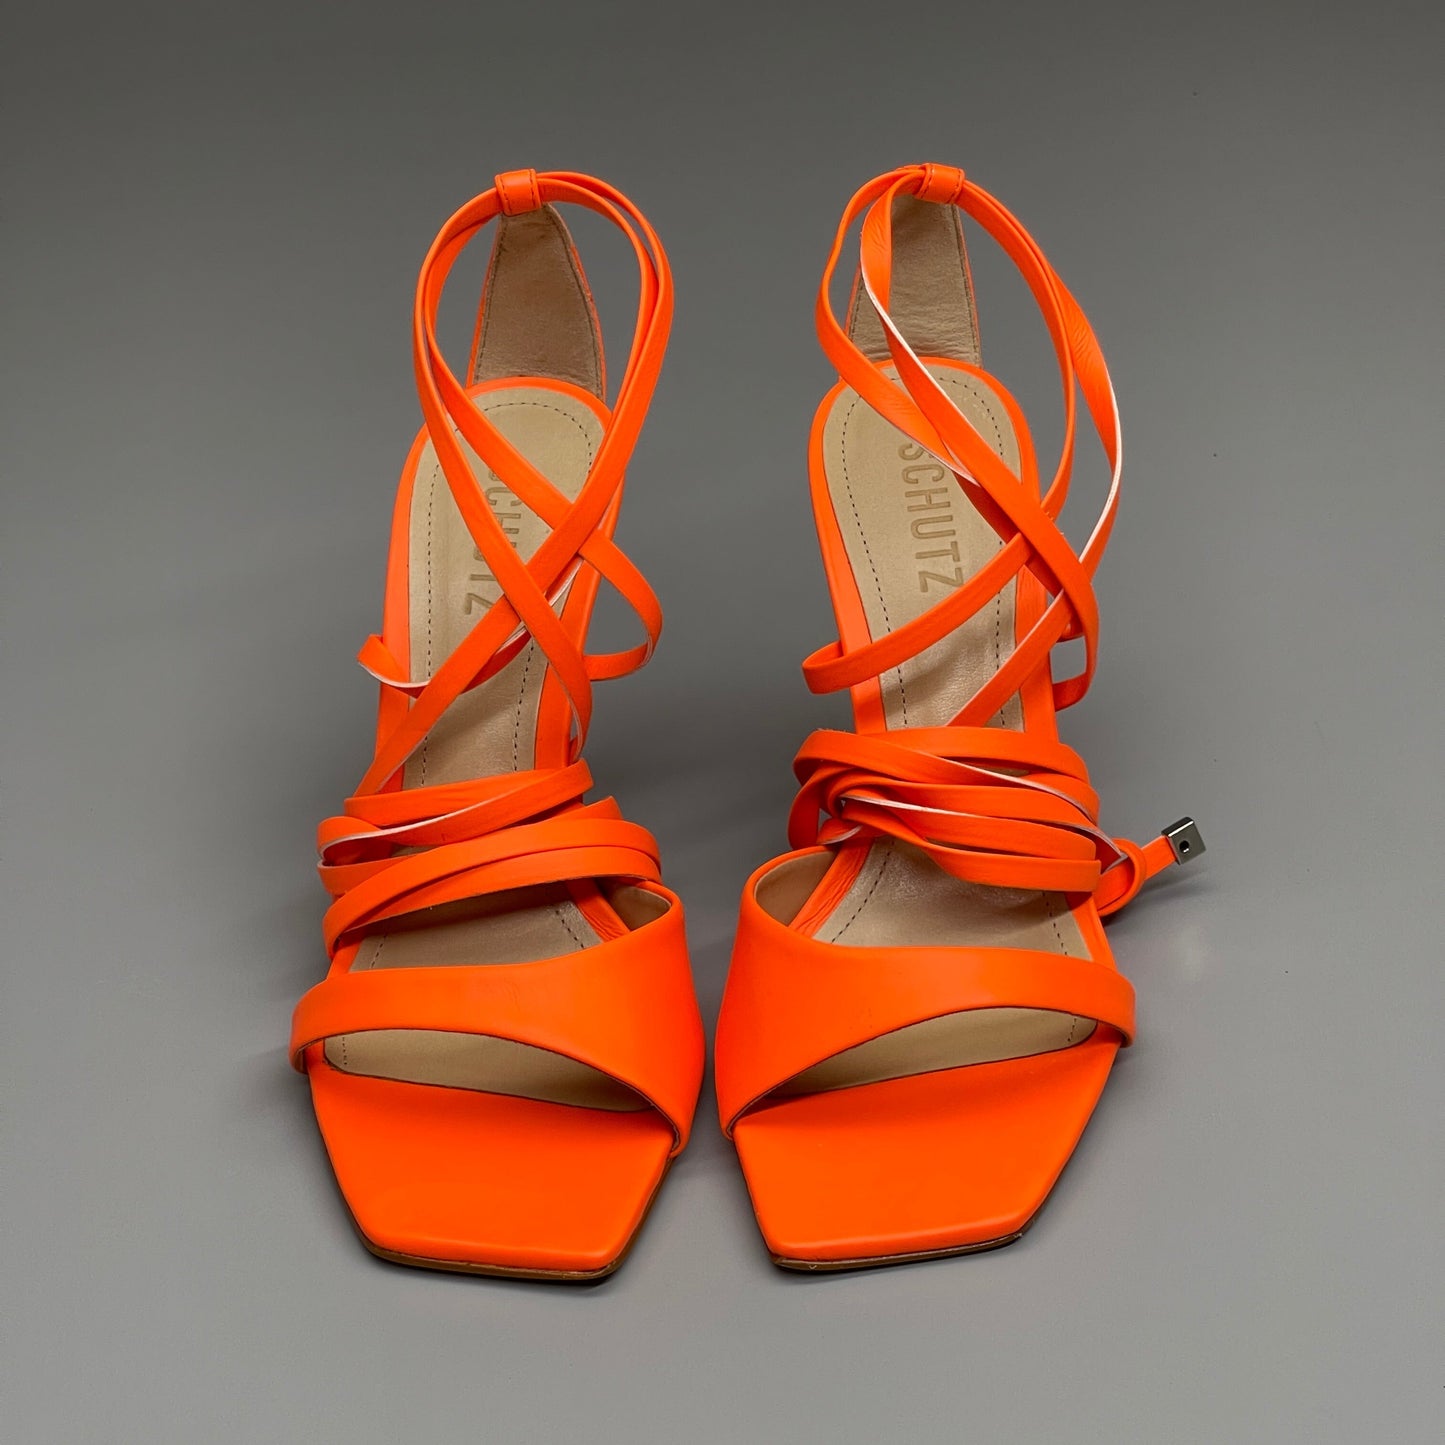 SCHUTZ Bryce Ankle Tie Women's High Heel Leather Strappy Sandal Acid Orange Sz 7 (New)